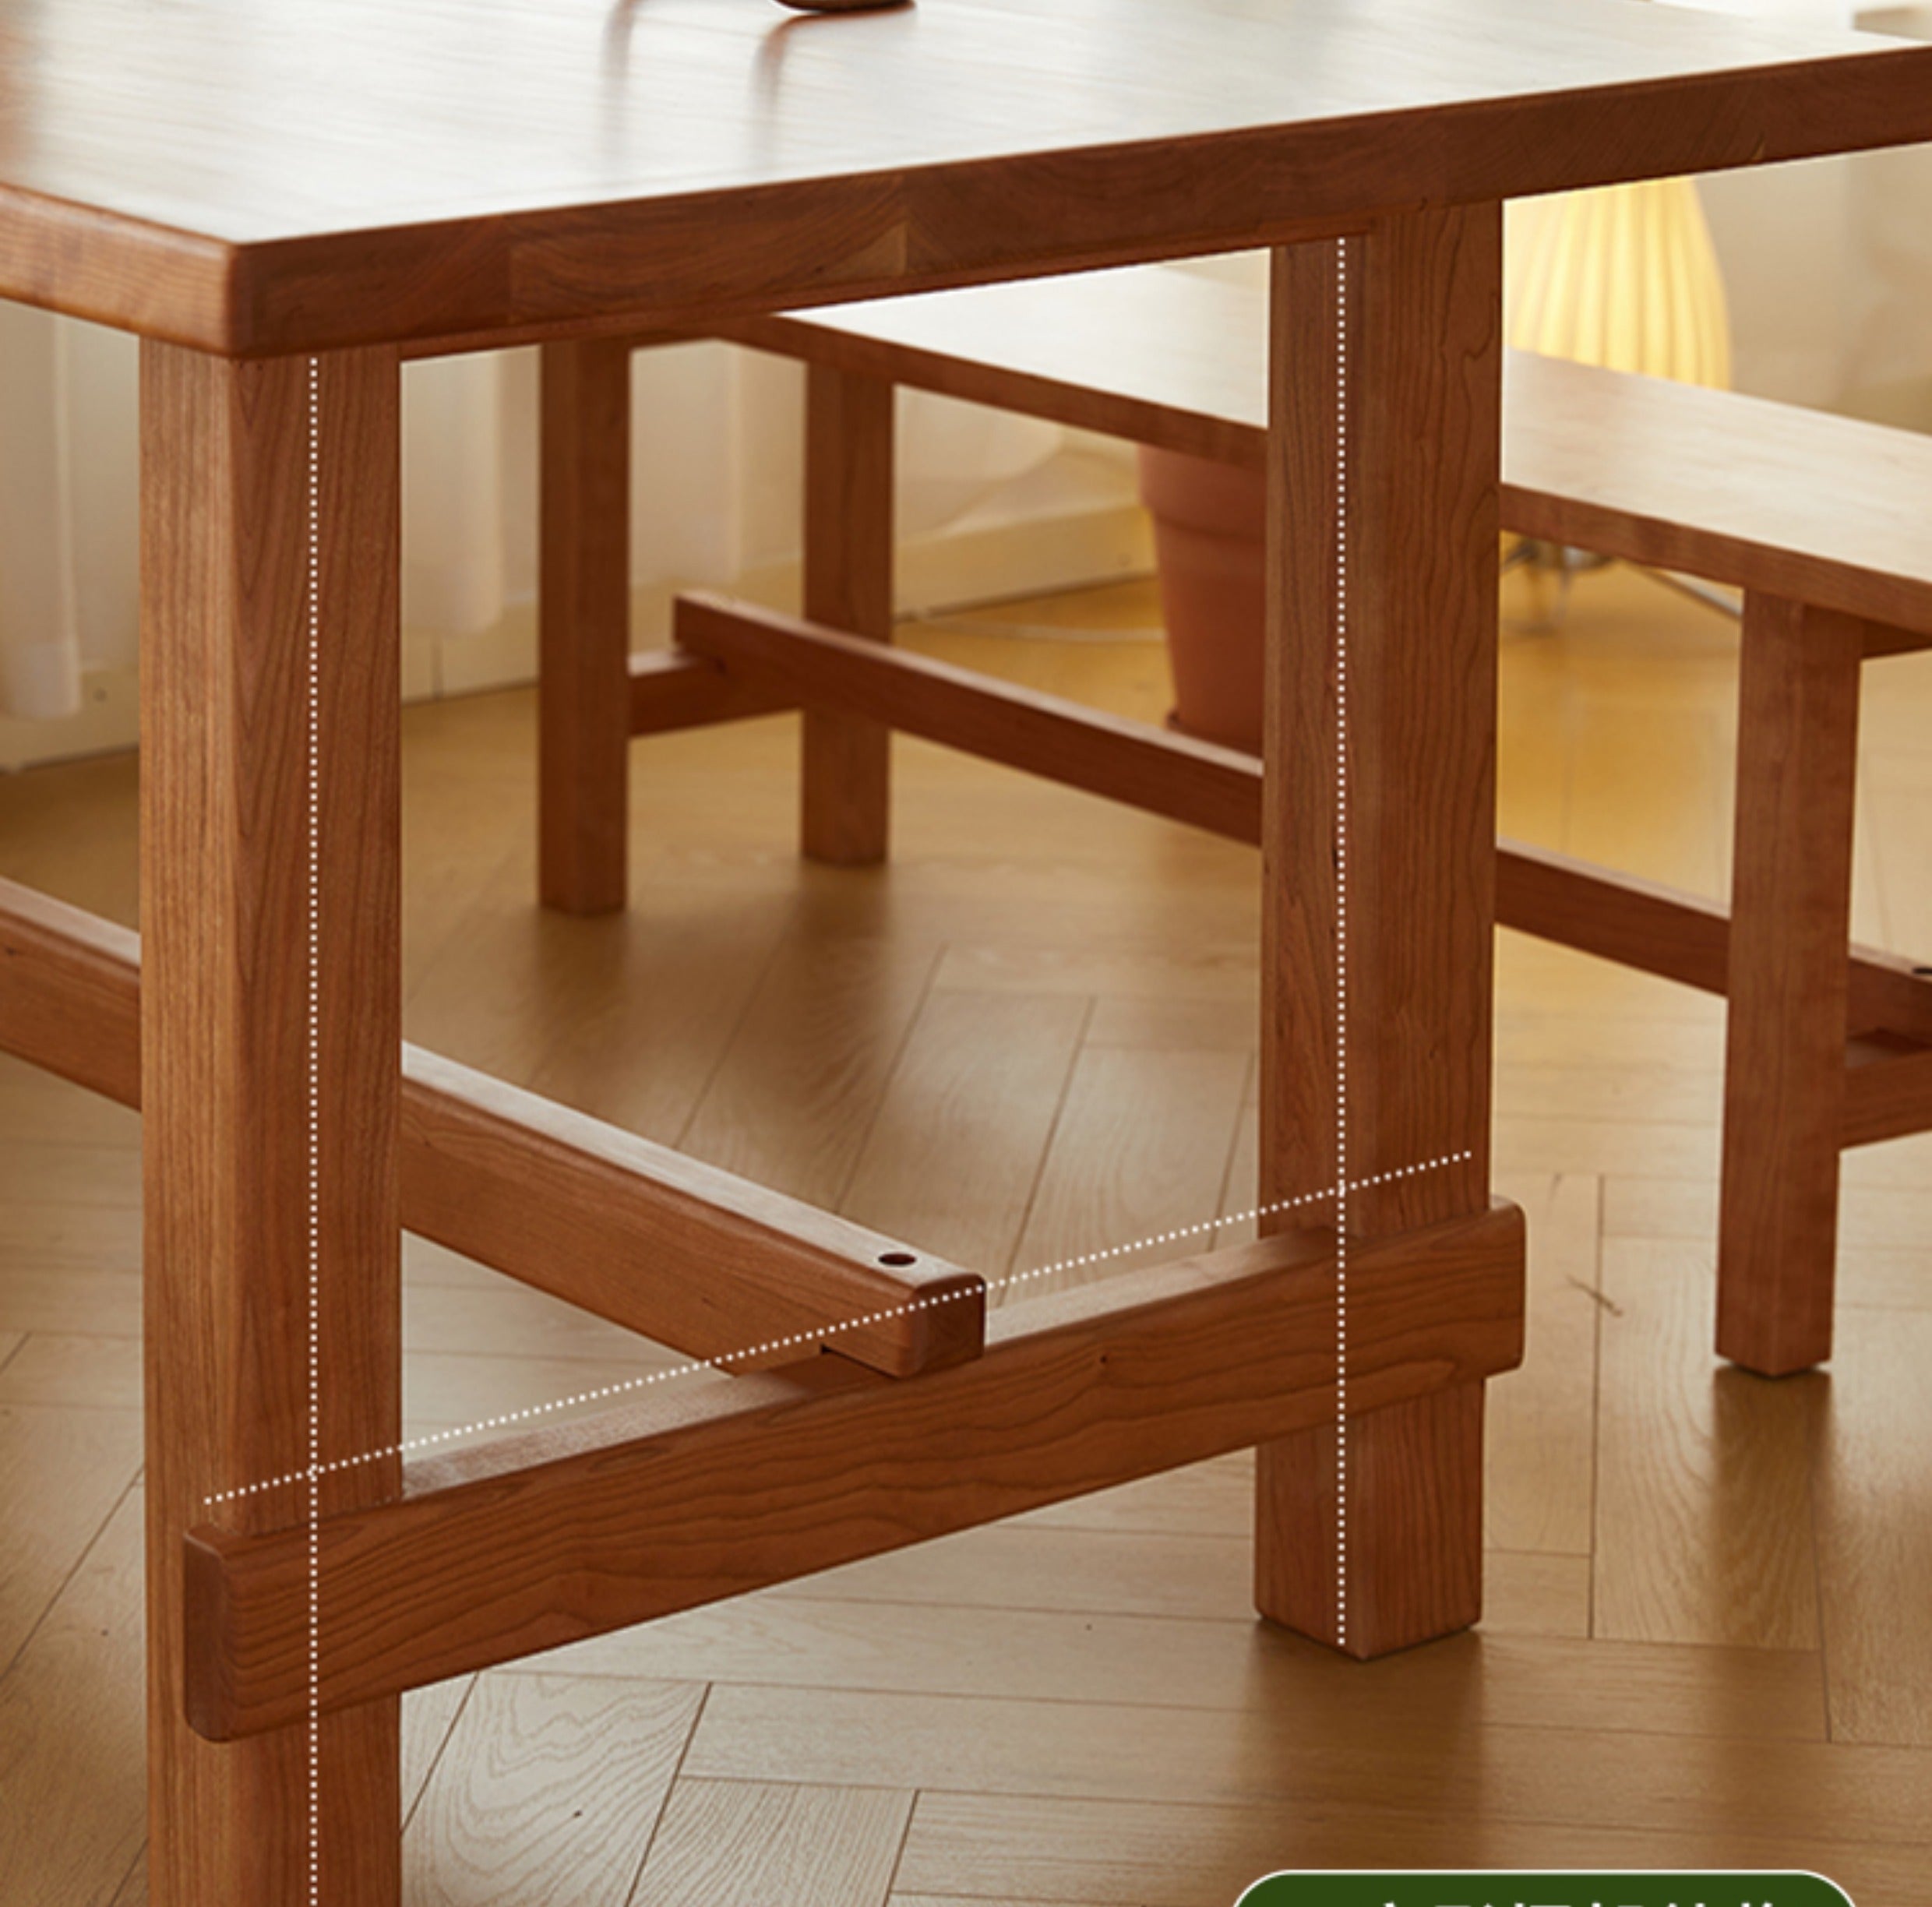 Se vende mesa de comedor de madera de cerezo, mesa de comedor rectangular de madera de cerezo